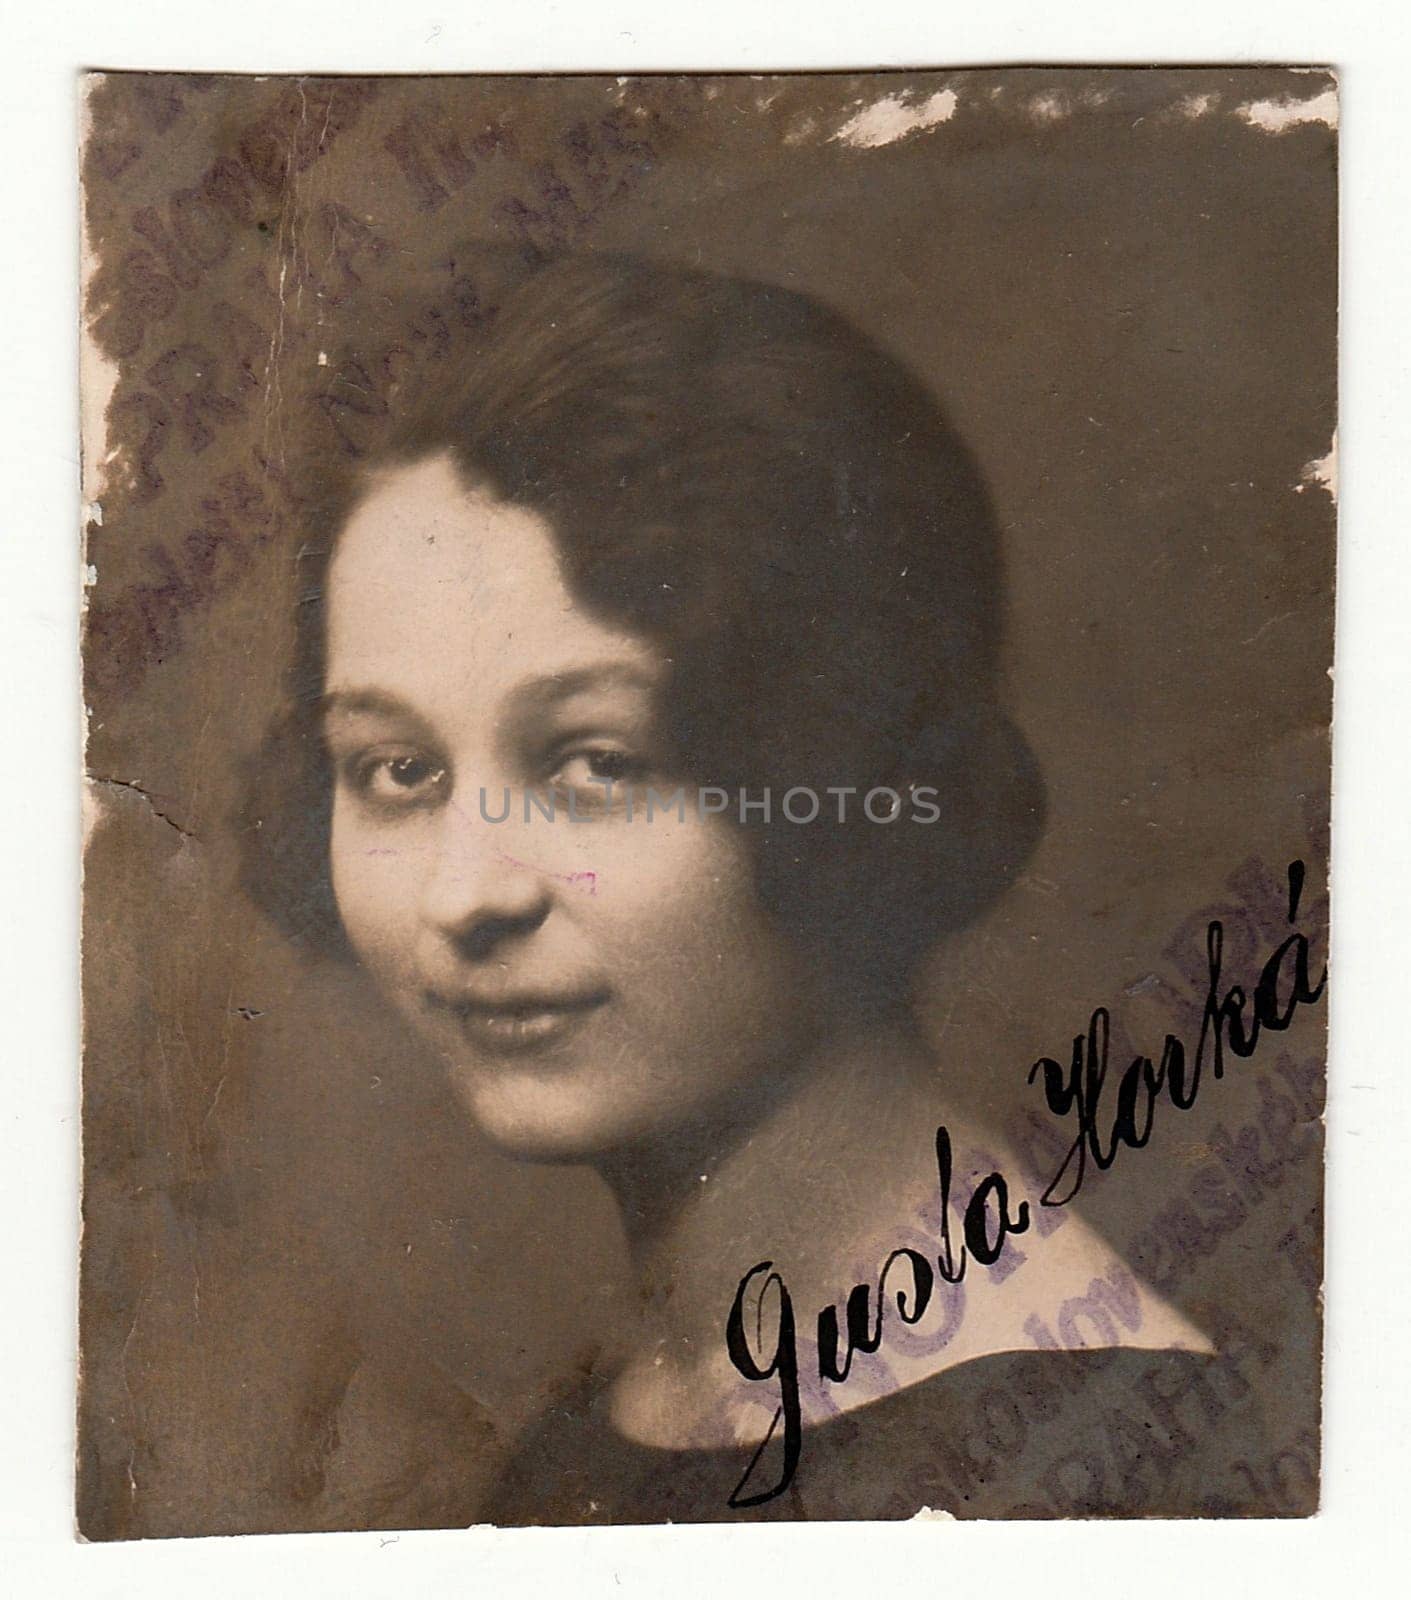 THE CZECHOSLOVAK REPUBLIC - CIRCA 1940s: Vintage portrait of a woman with signature.